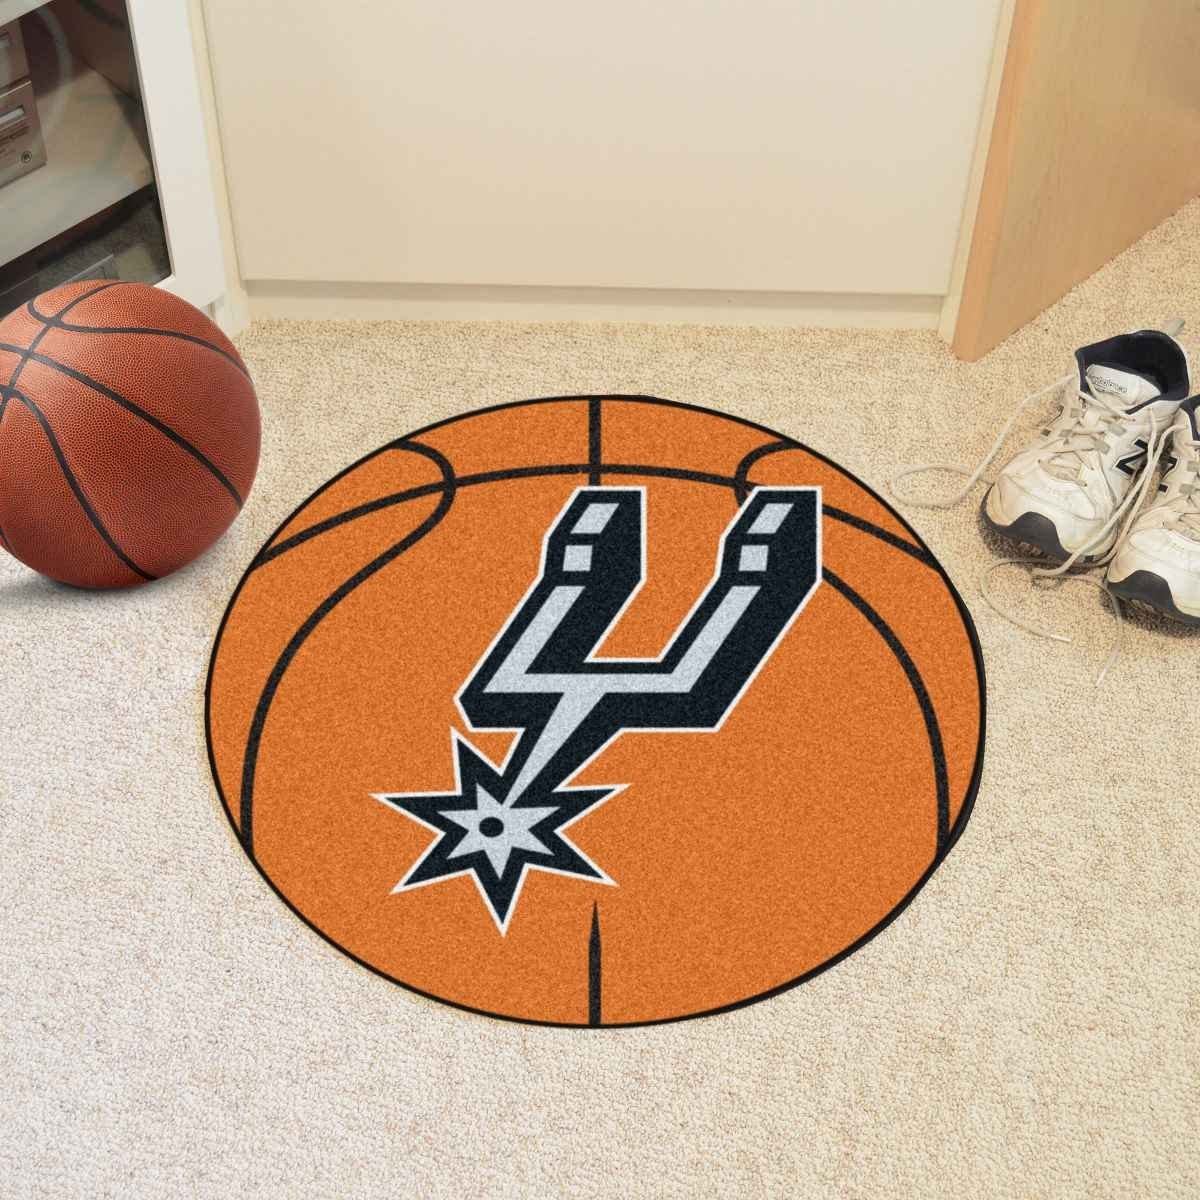 San Antonio Spurs 27 Inch Area Rug Floor Mat, Nylon, Anti-Skid Backing, Basketball Shaped